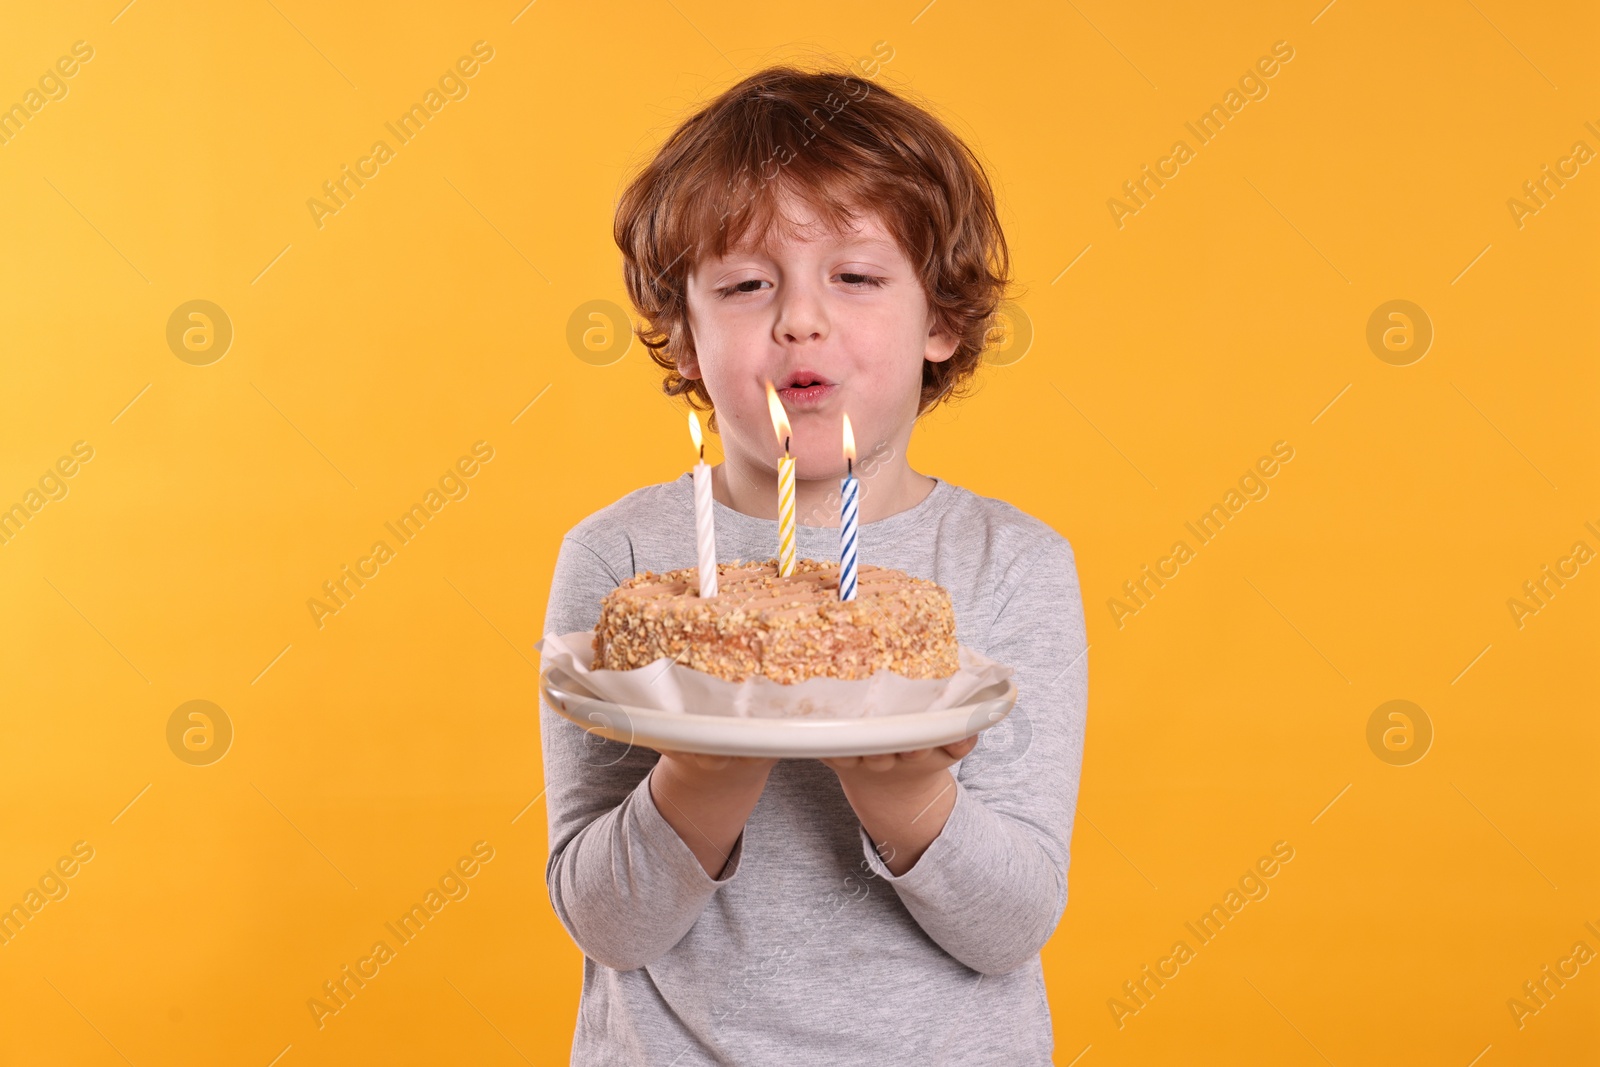 Photo of Birthday celebration. Cute little boy blowing candles on tasty cake against orange background